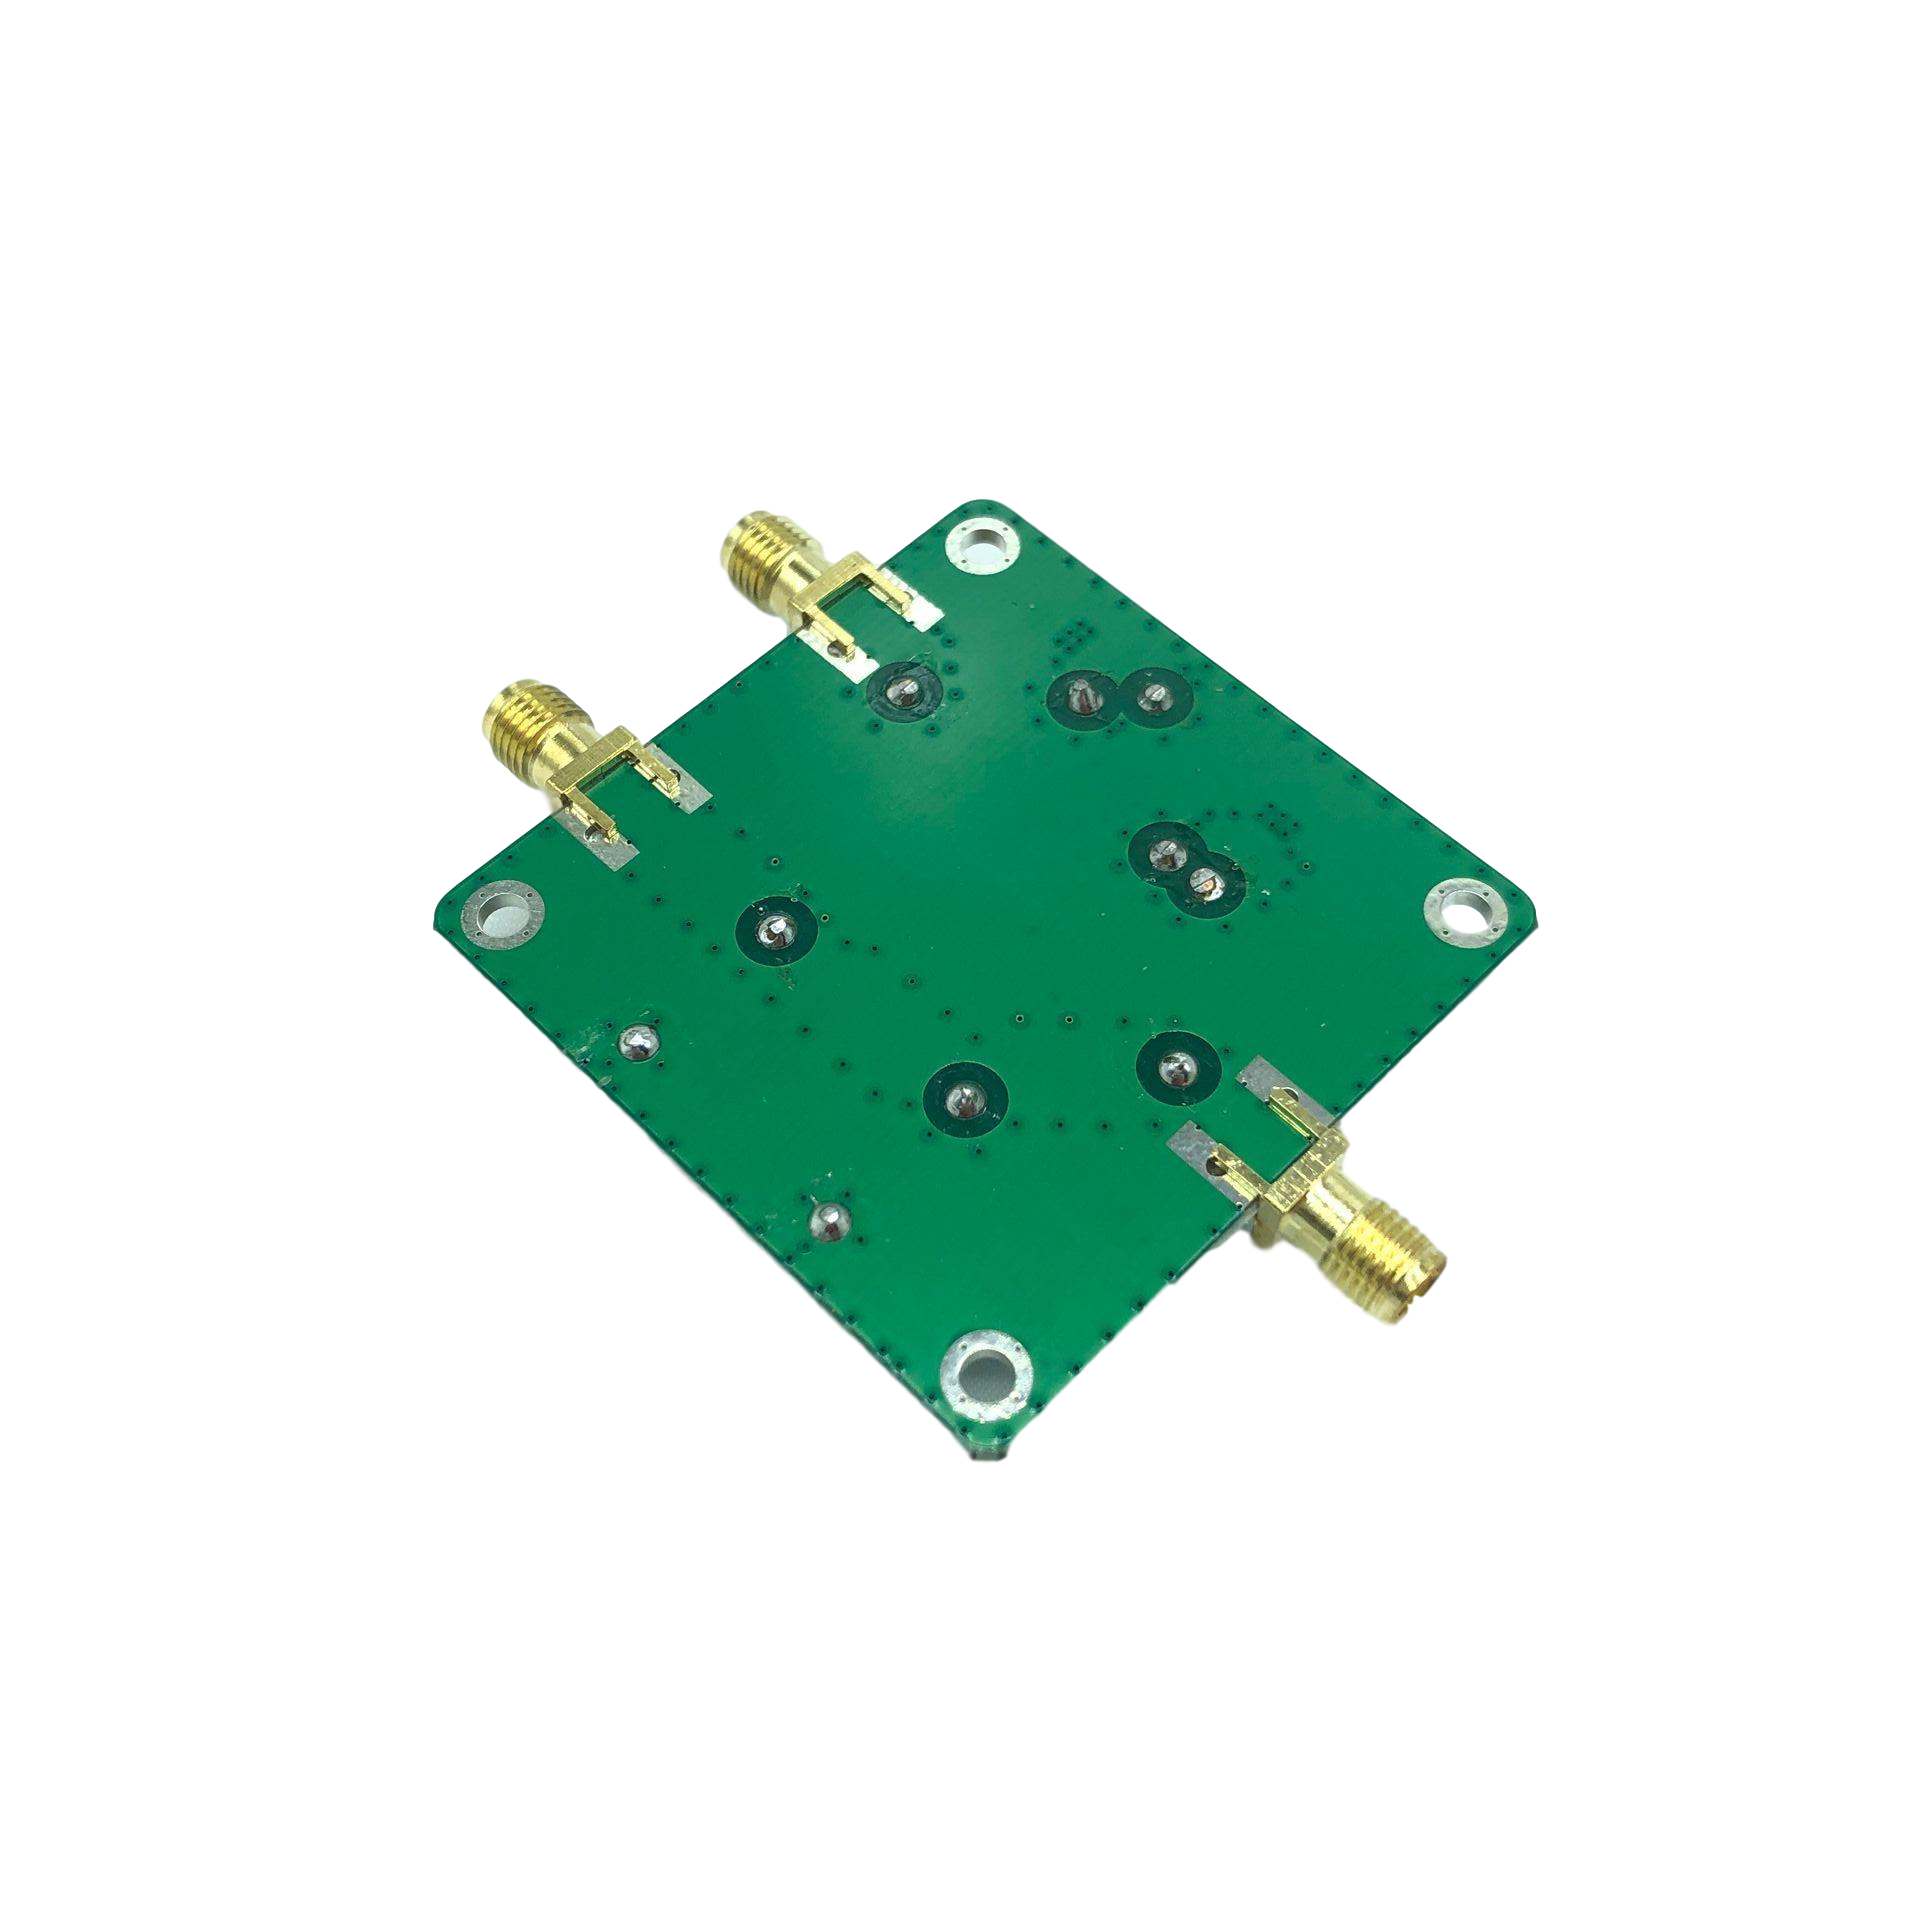 UV-Combiner-UV-Splitter-LC-Filter-Antenna-Combiner-Board-Passive-Module-1800190-5